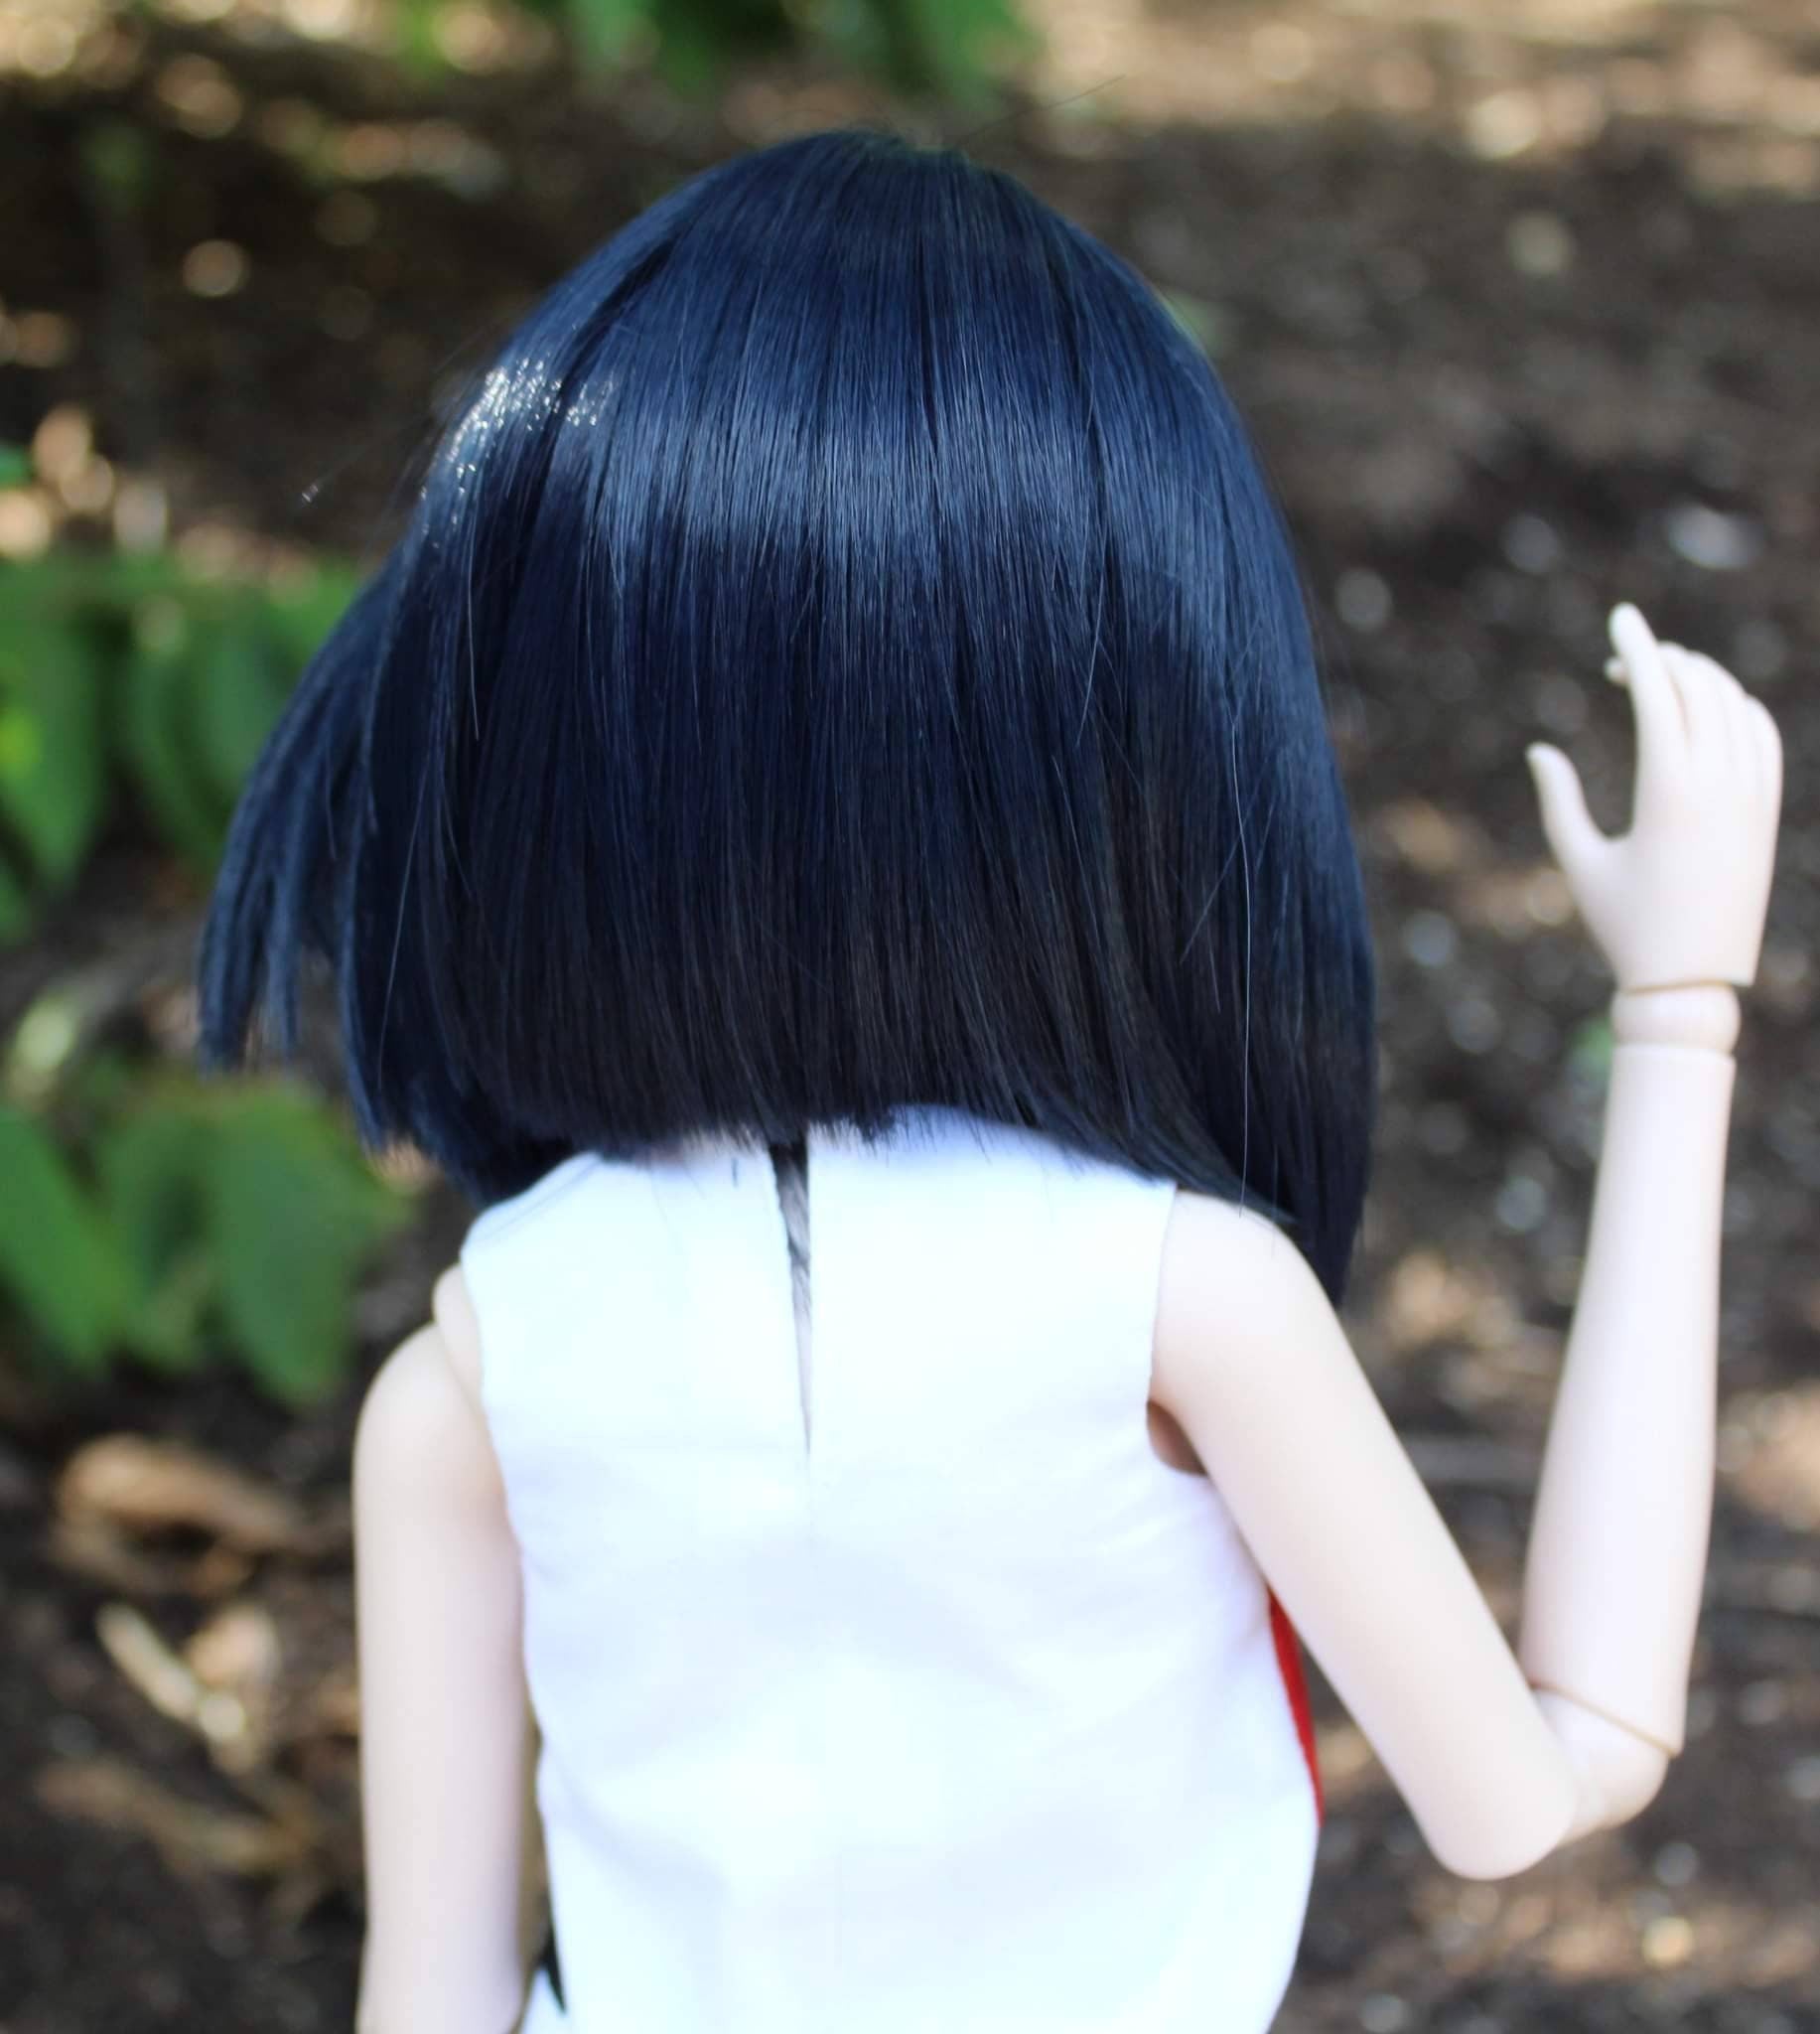 Custom doll Wig for Smart Dolls- Heat Safe - Tangle Resistant- 8.5" head size of Bjd, SD, Dollfie Dream dolls deep blue bob